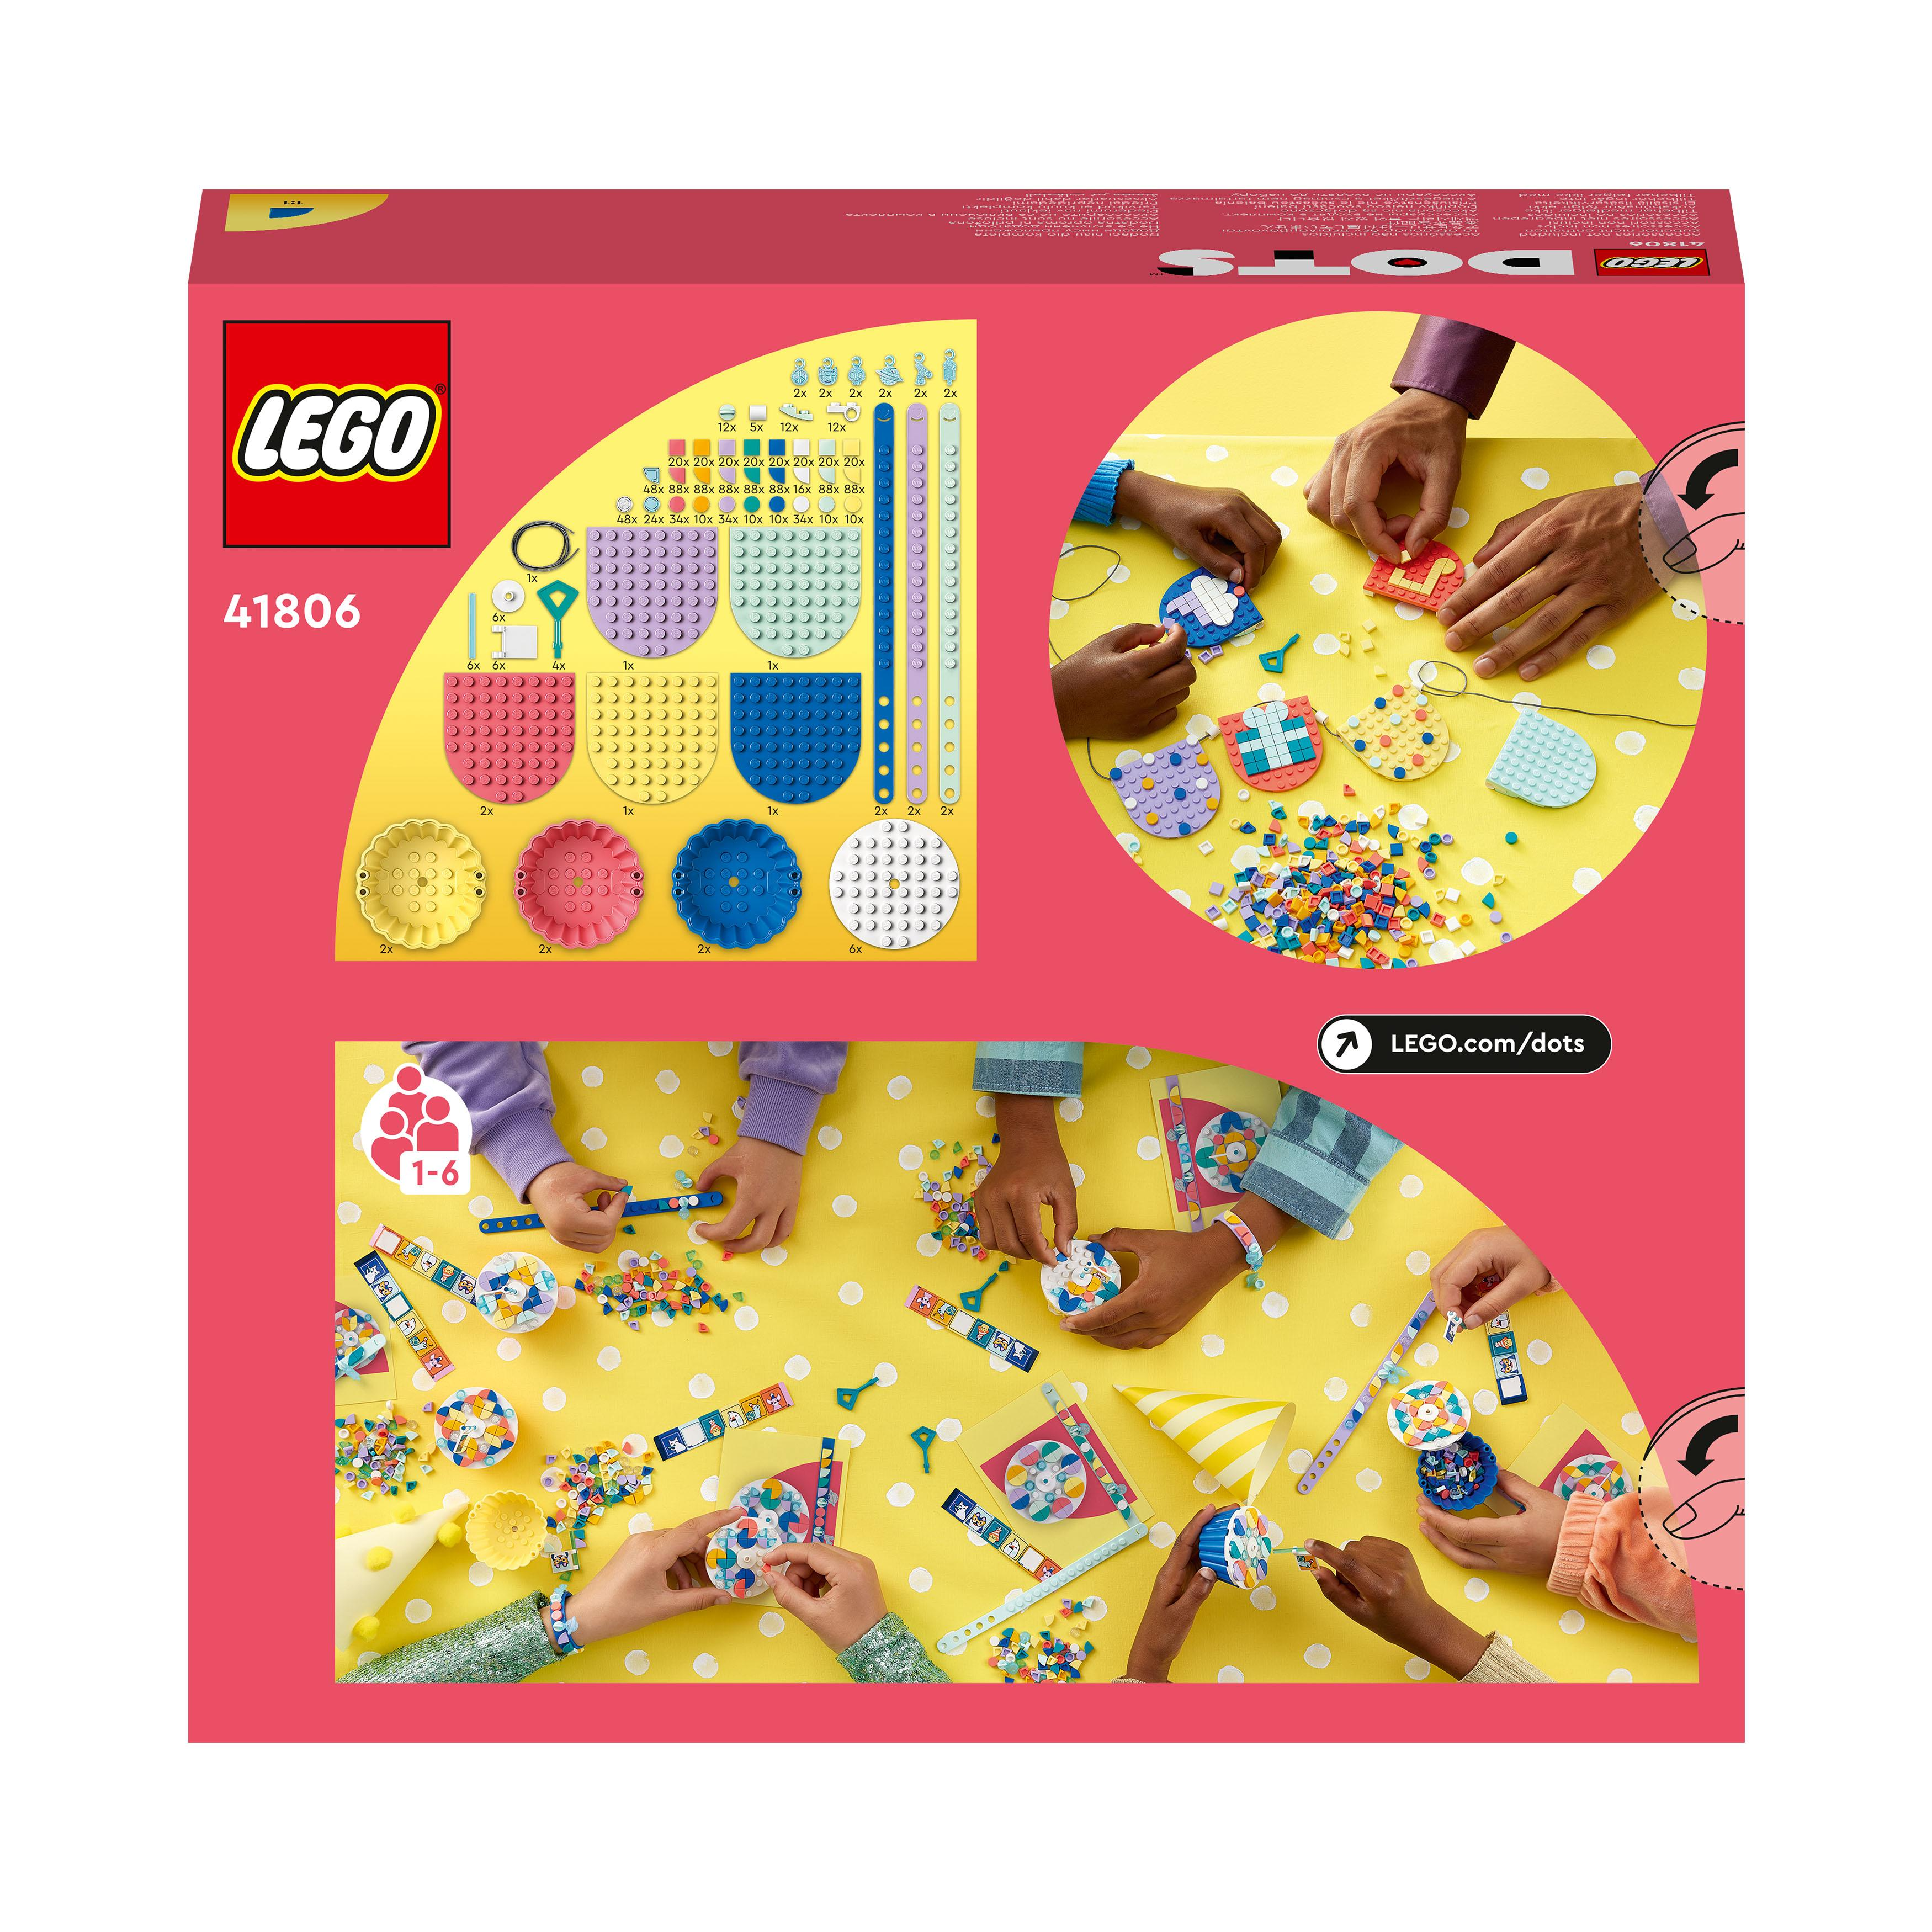 LEGO DOTS 41806 Ultimatives Bausatz, Partyset Mehrfarbig